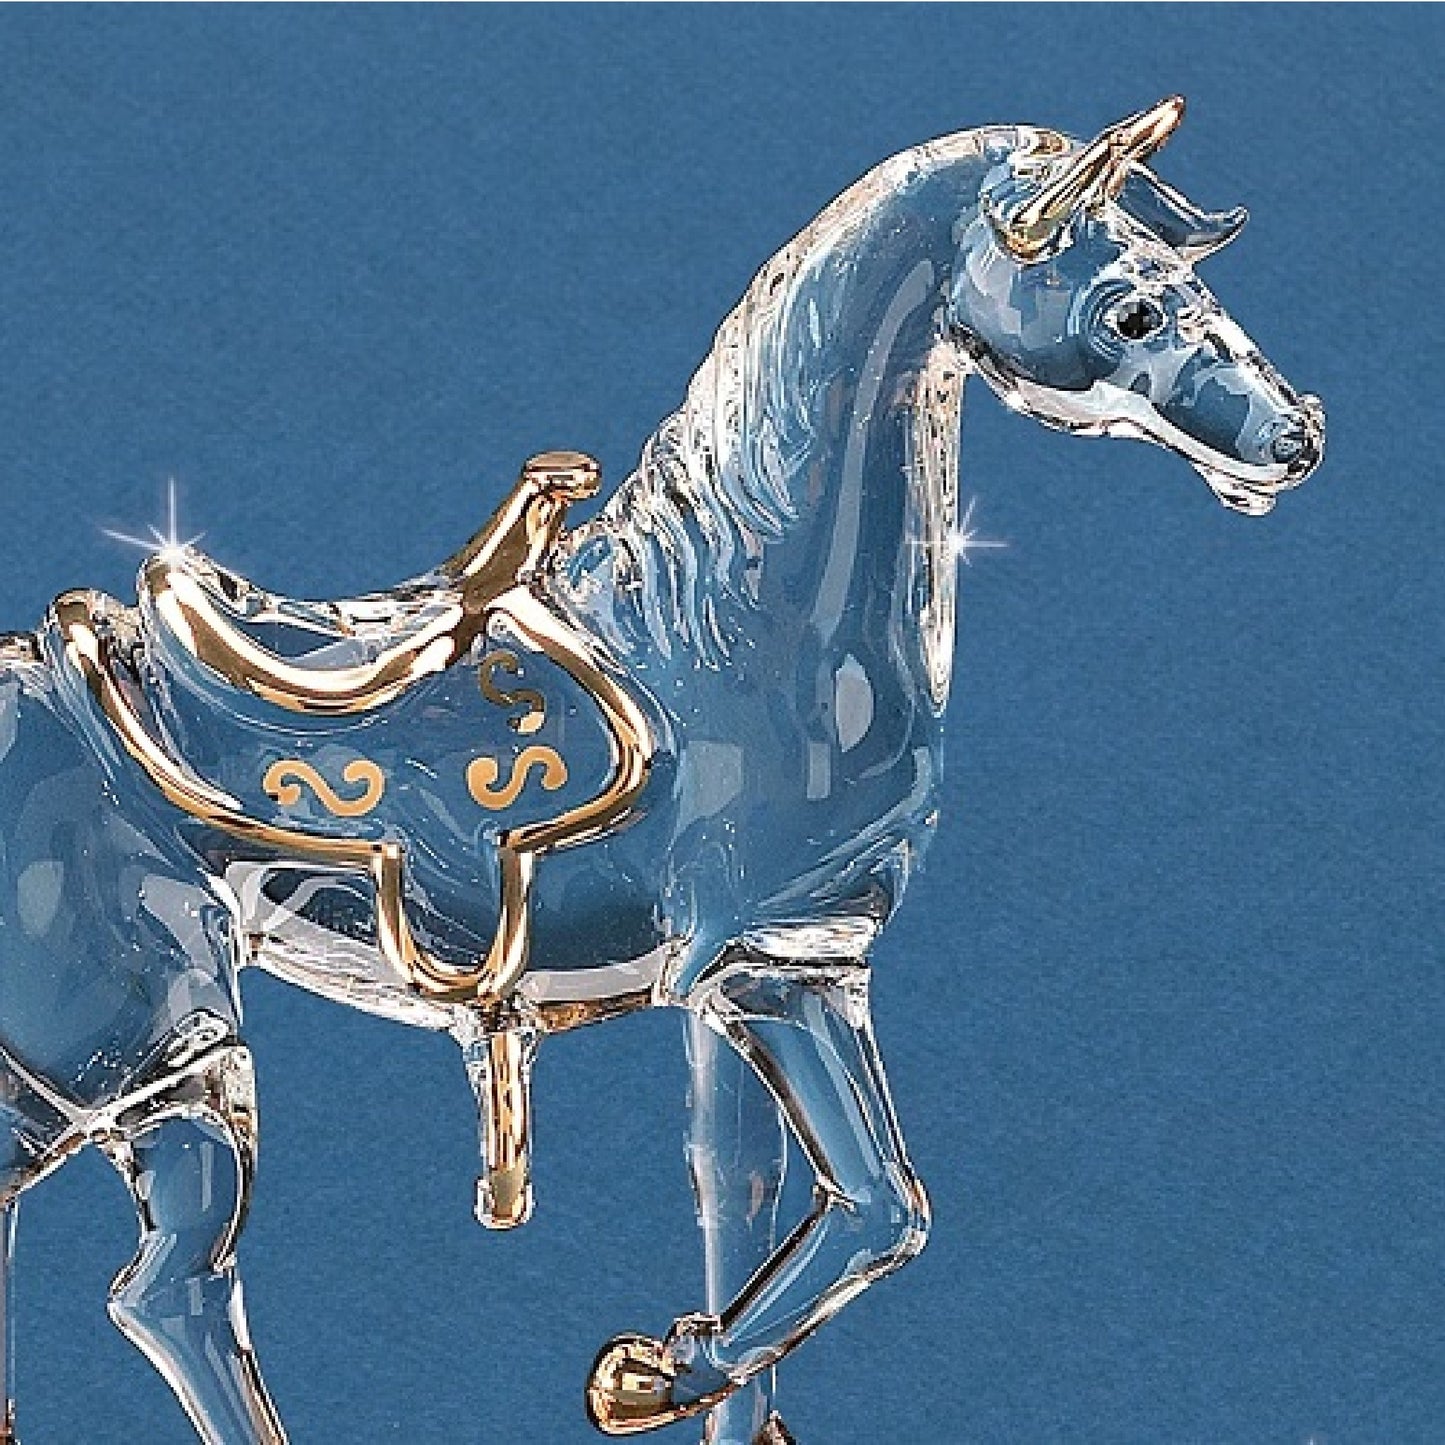 Glass Baron Horse